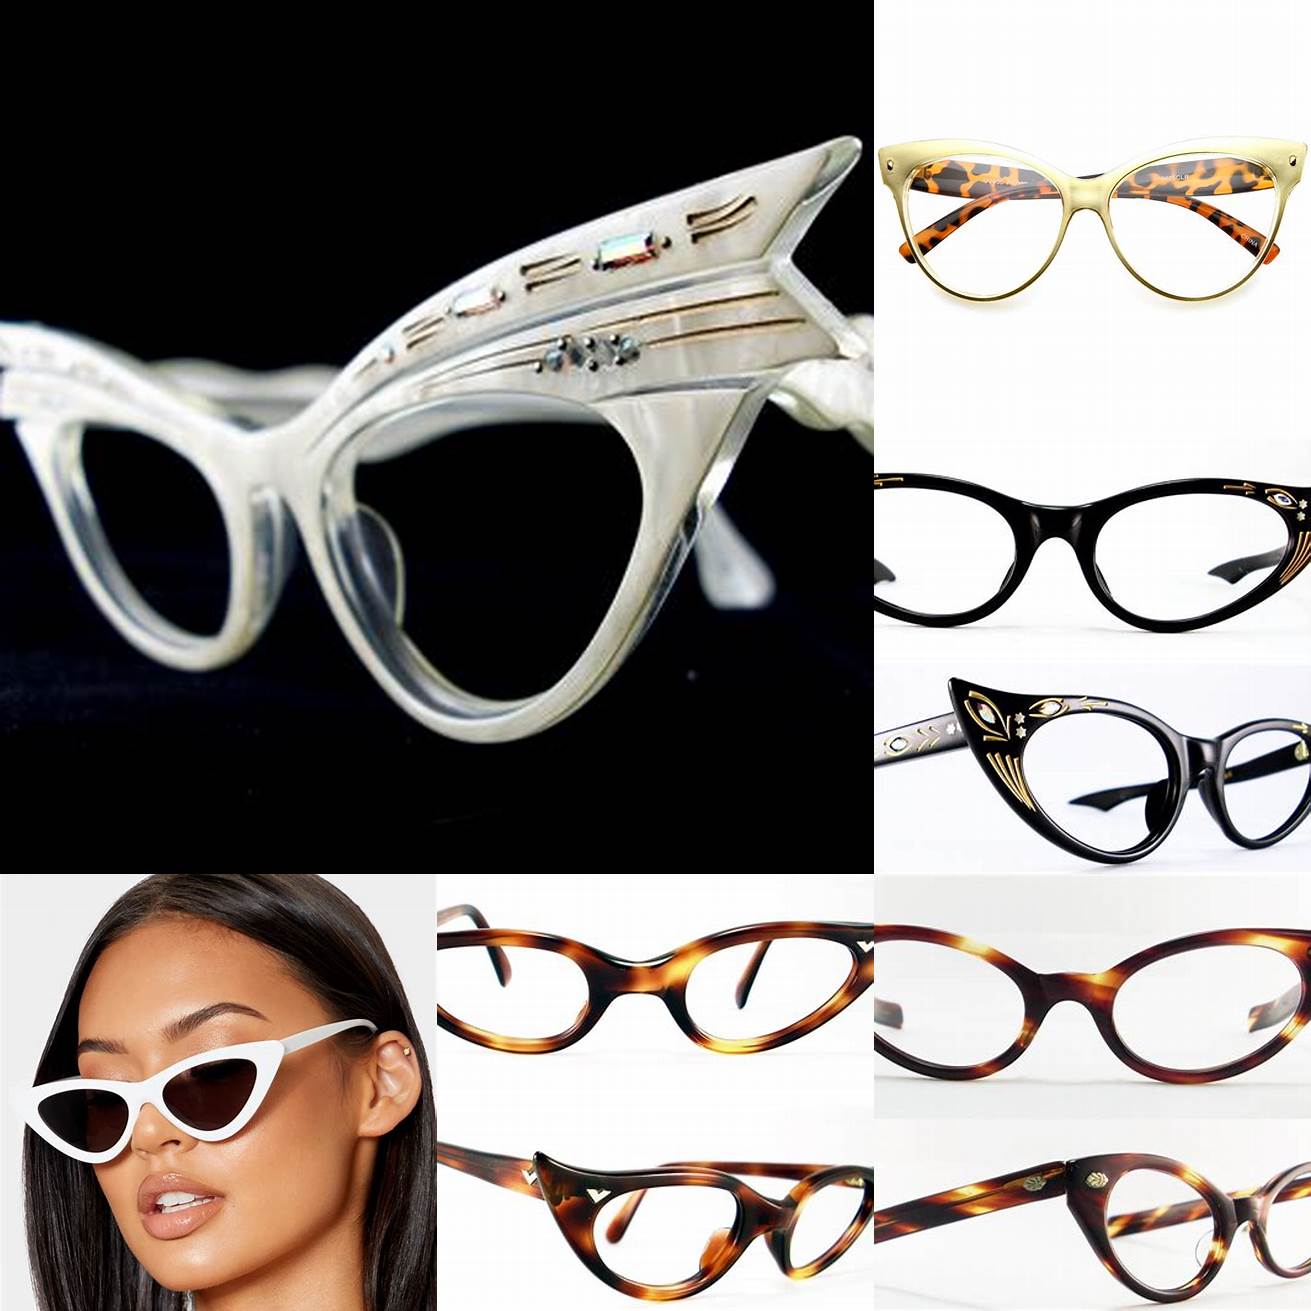 5 Retro Cat Eye Glasses